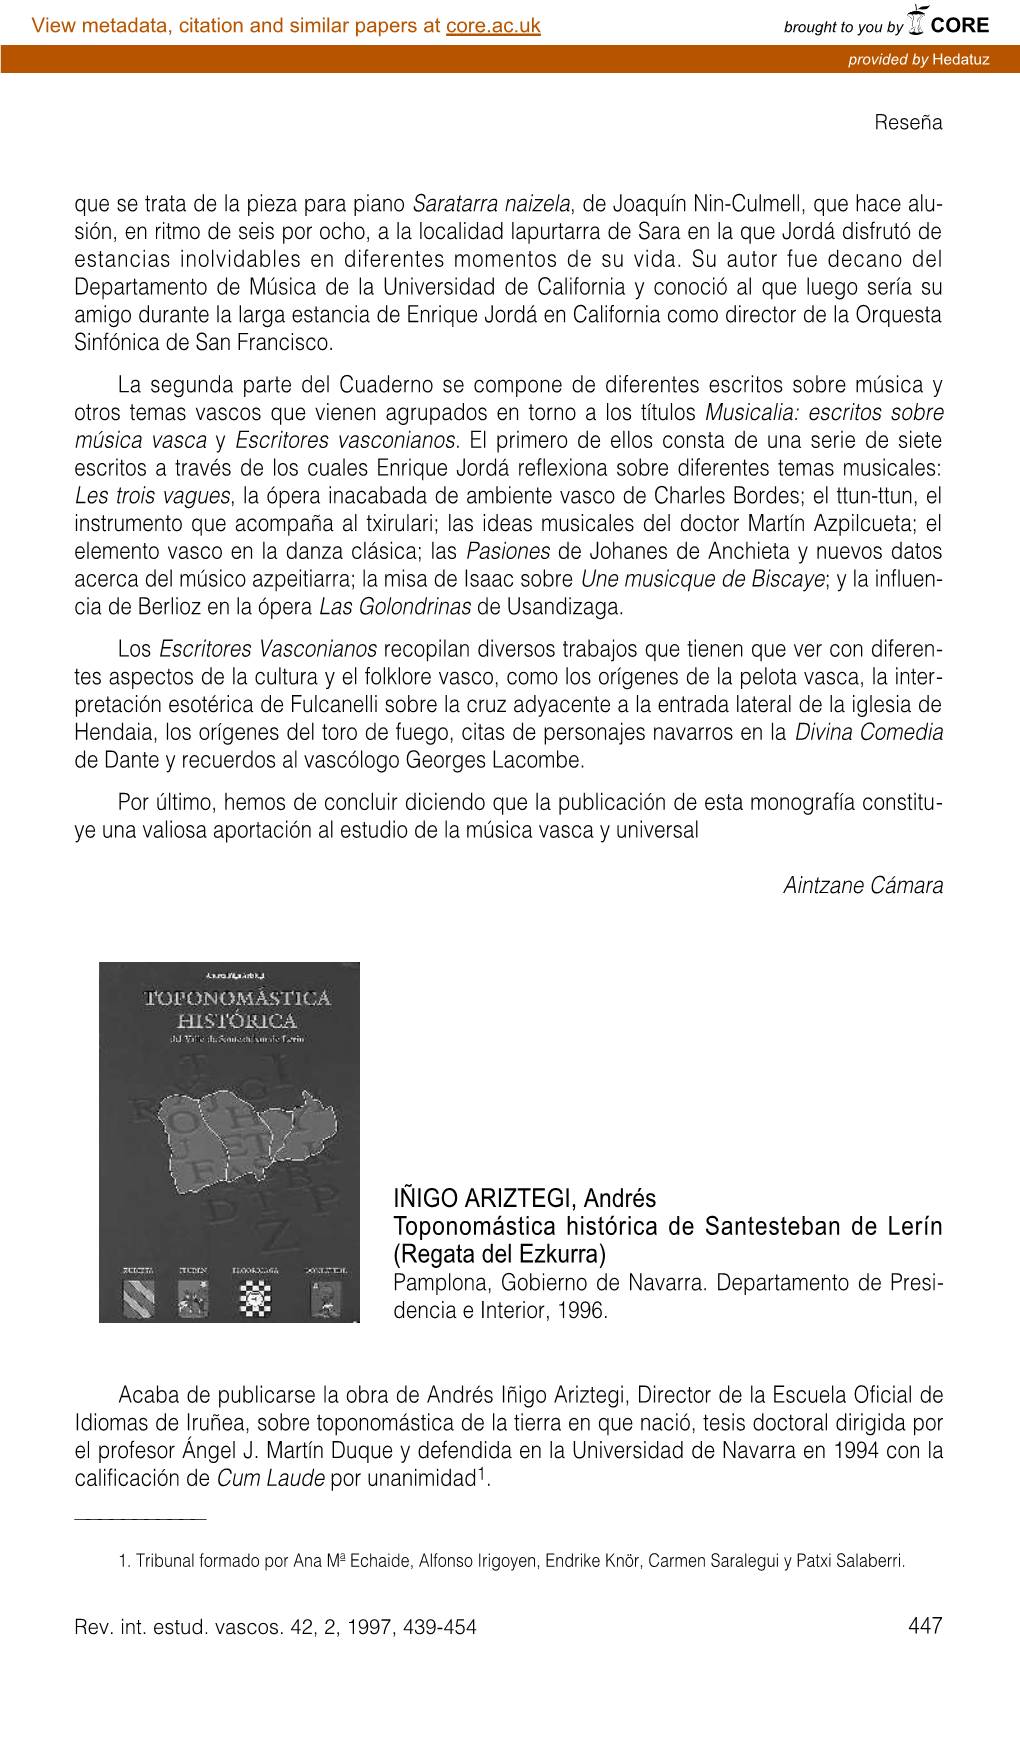 Iñigo Ariztegi, Andrés. Toponomástica Histórica De Santesteban